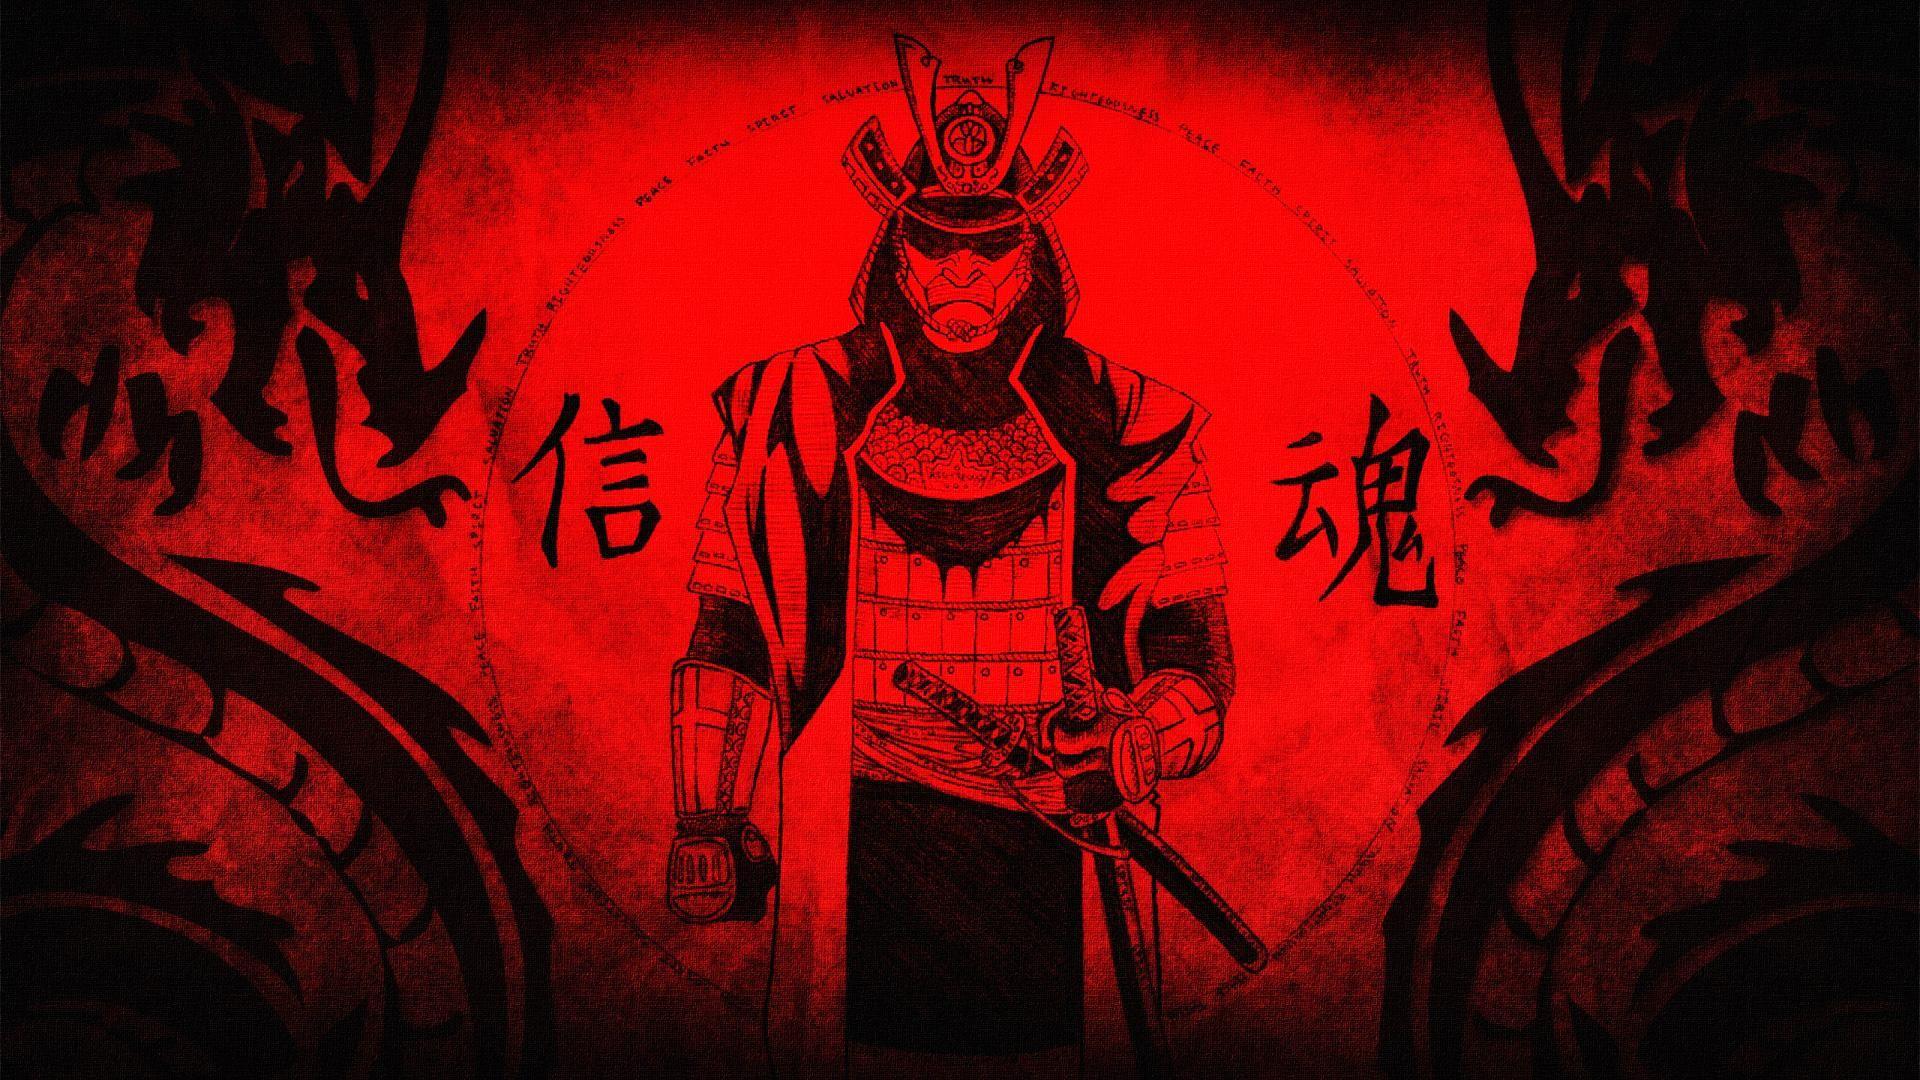 Gallery For: Samurai Wallpaper, HQ Samurai Background